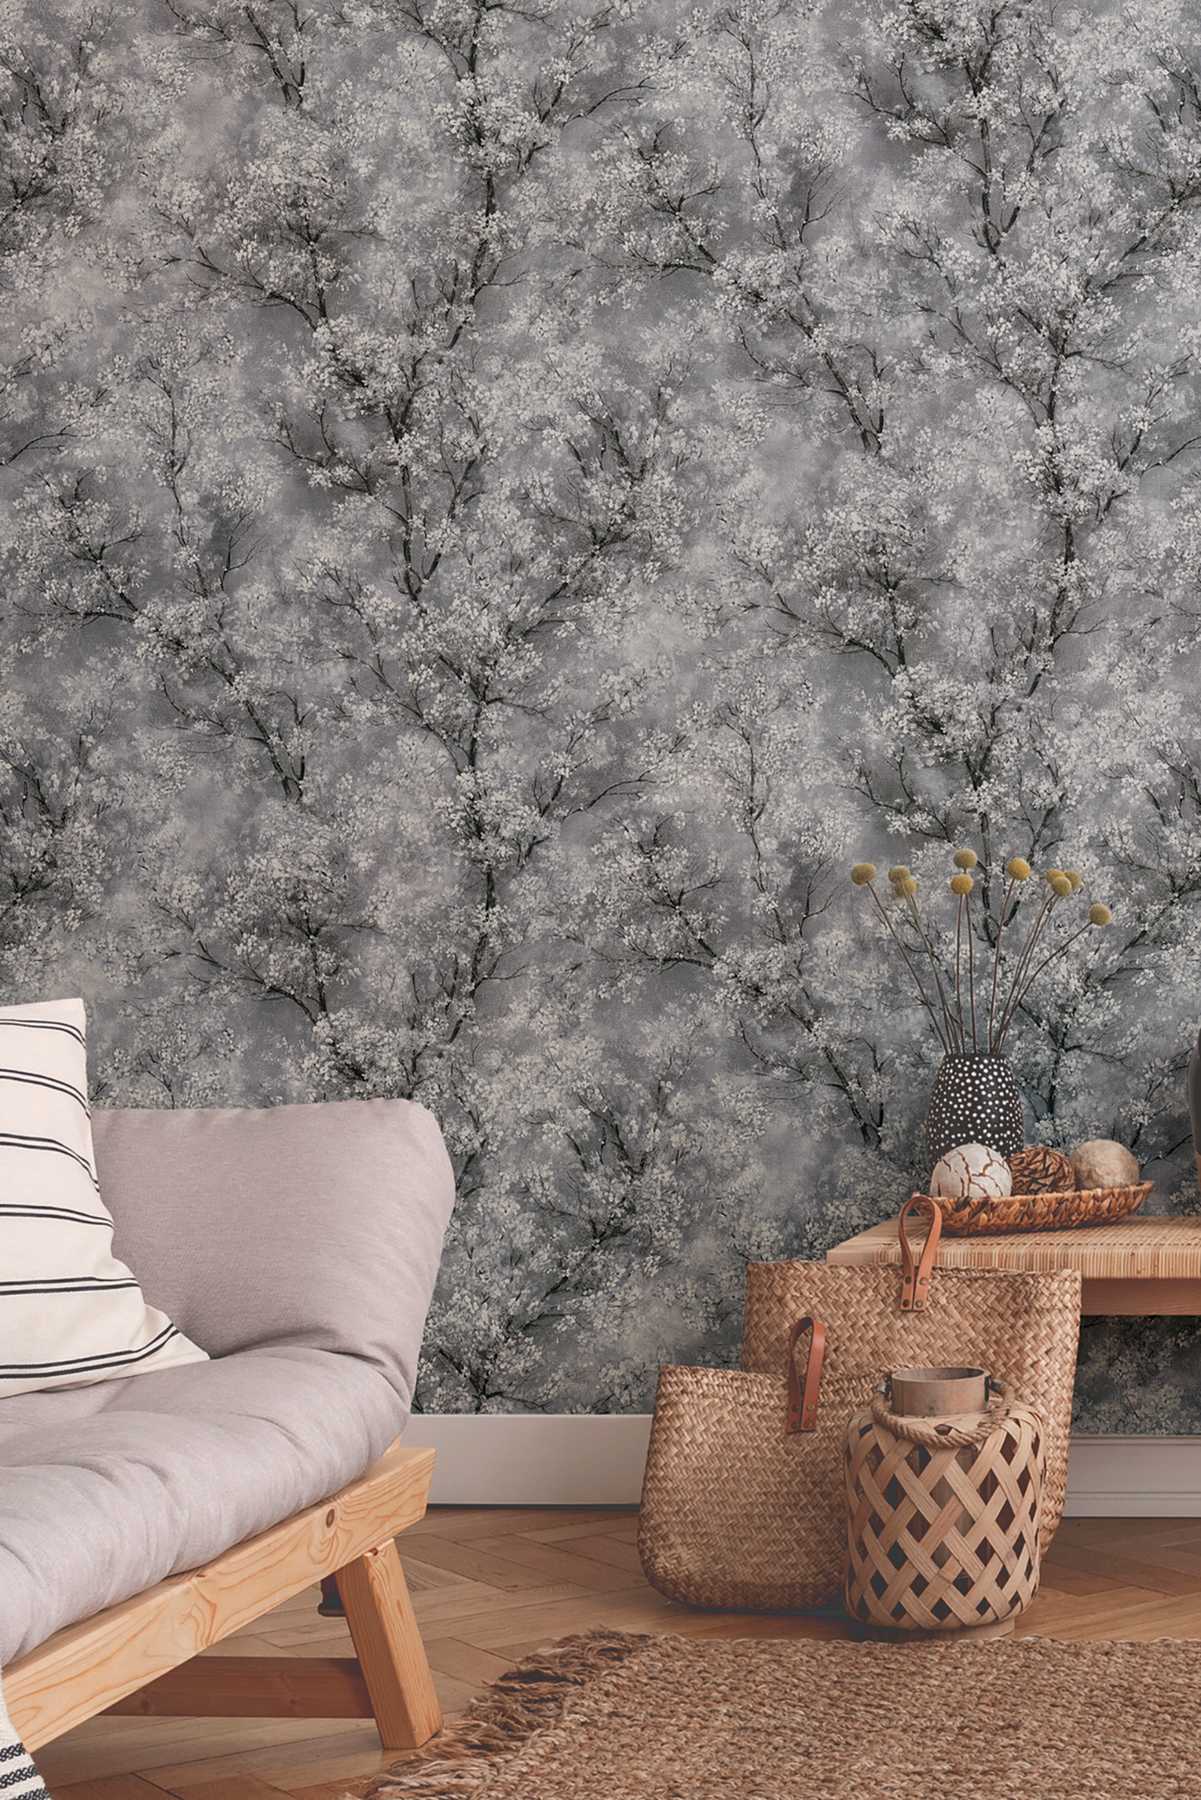             wallpaper cherry blossoms glitter effect - grey, black, white
        